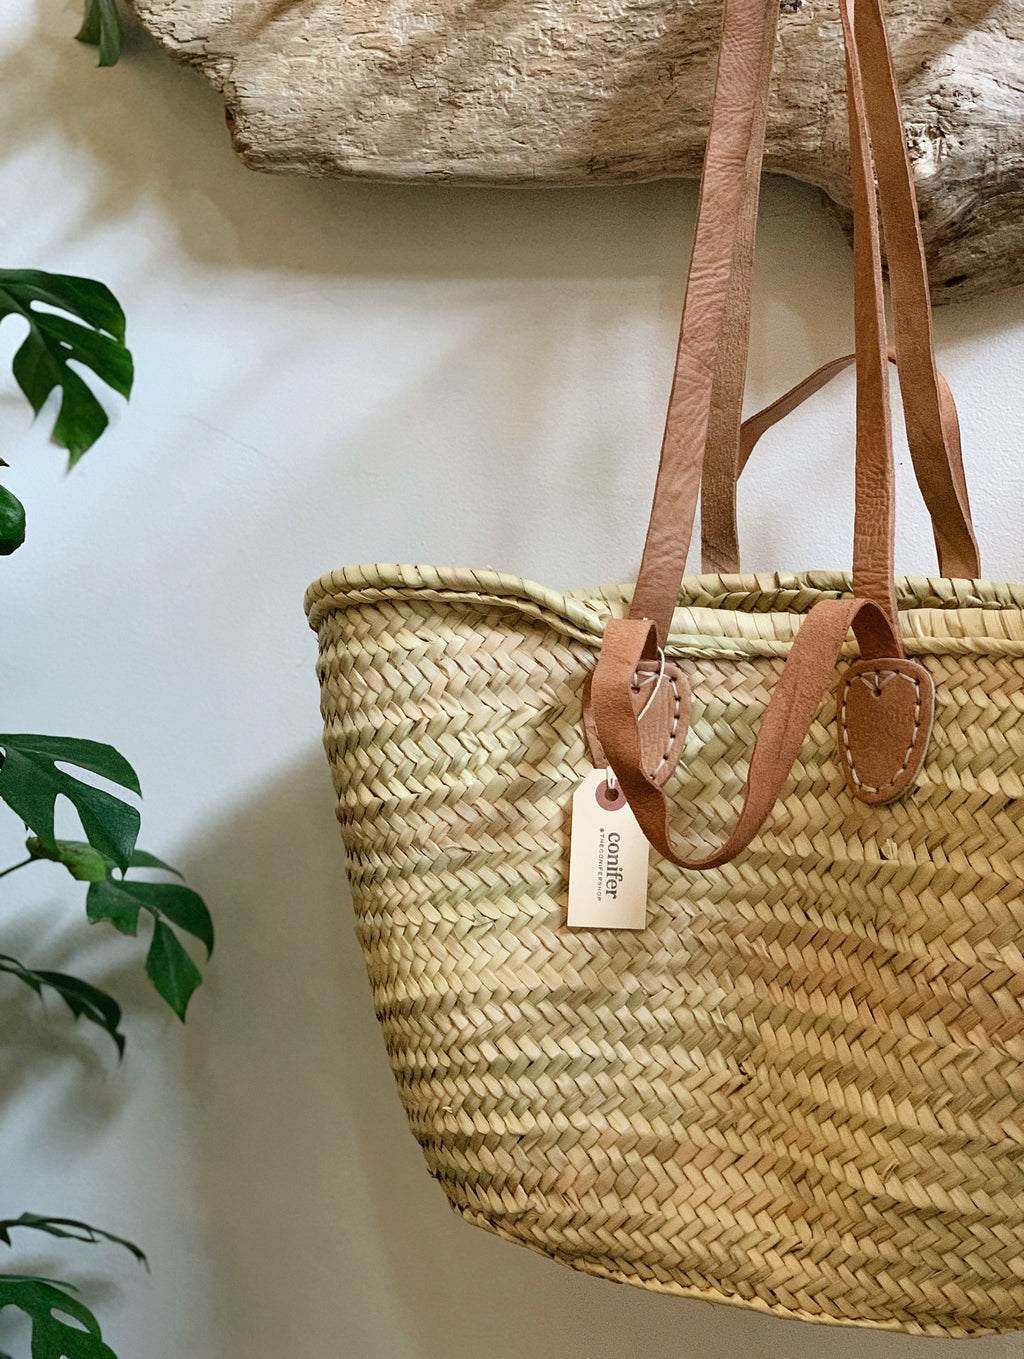 French Market Basket Bag / Straw Tote Bag / Summer Bag / Beach 